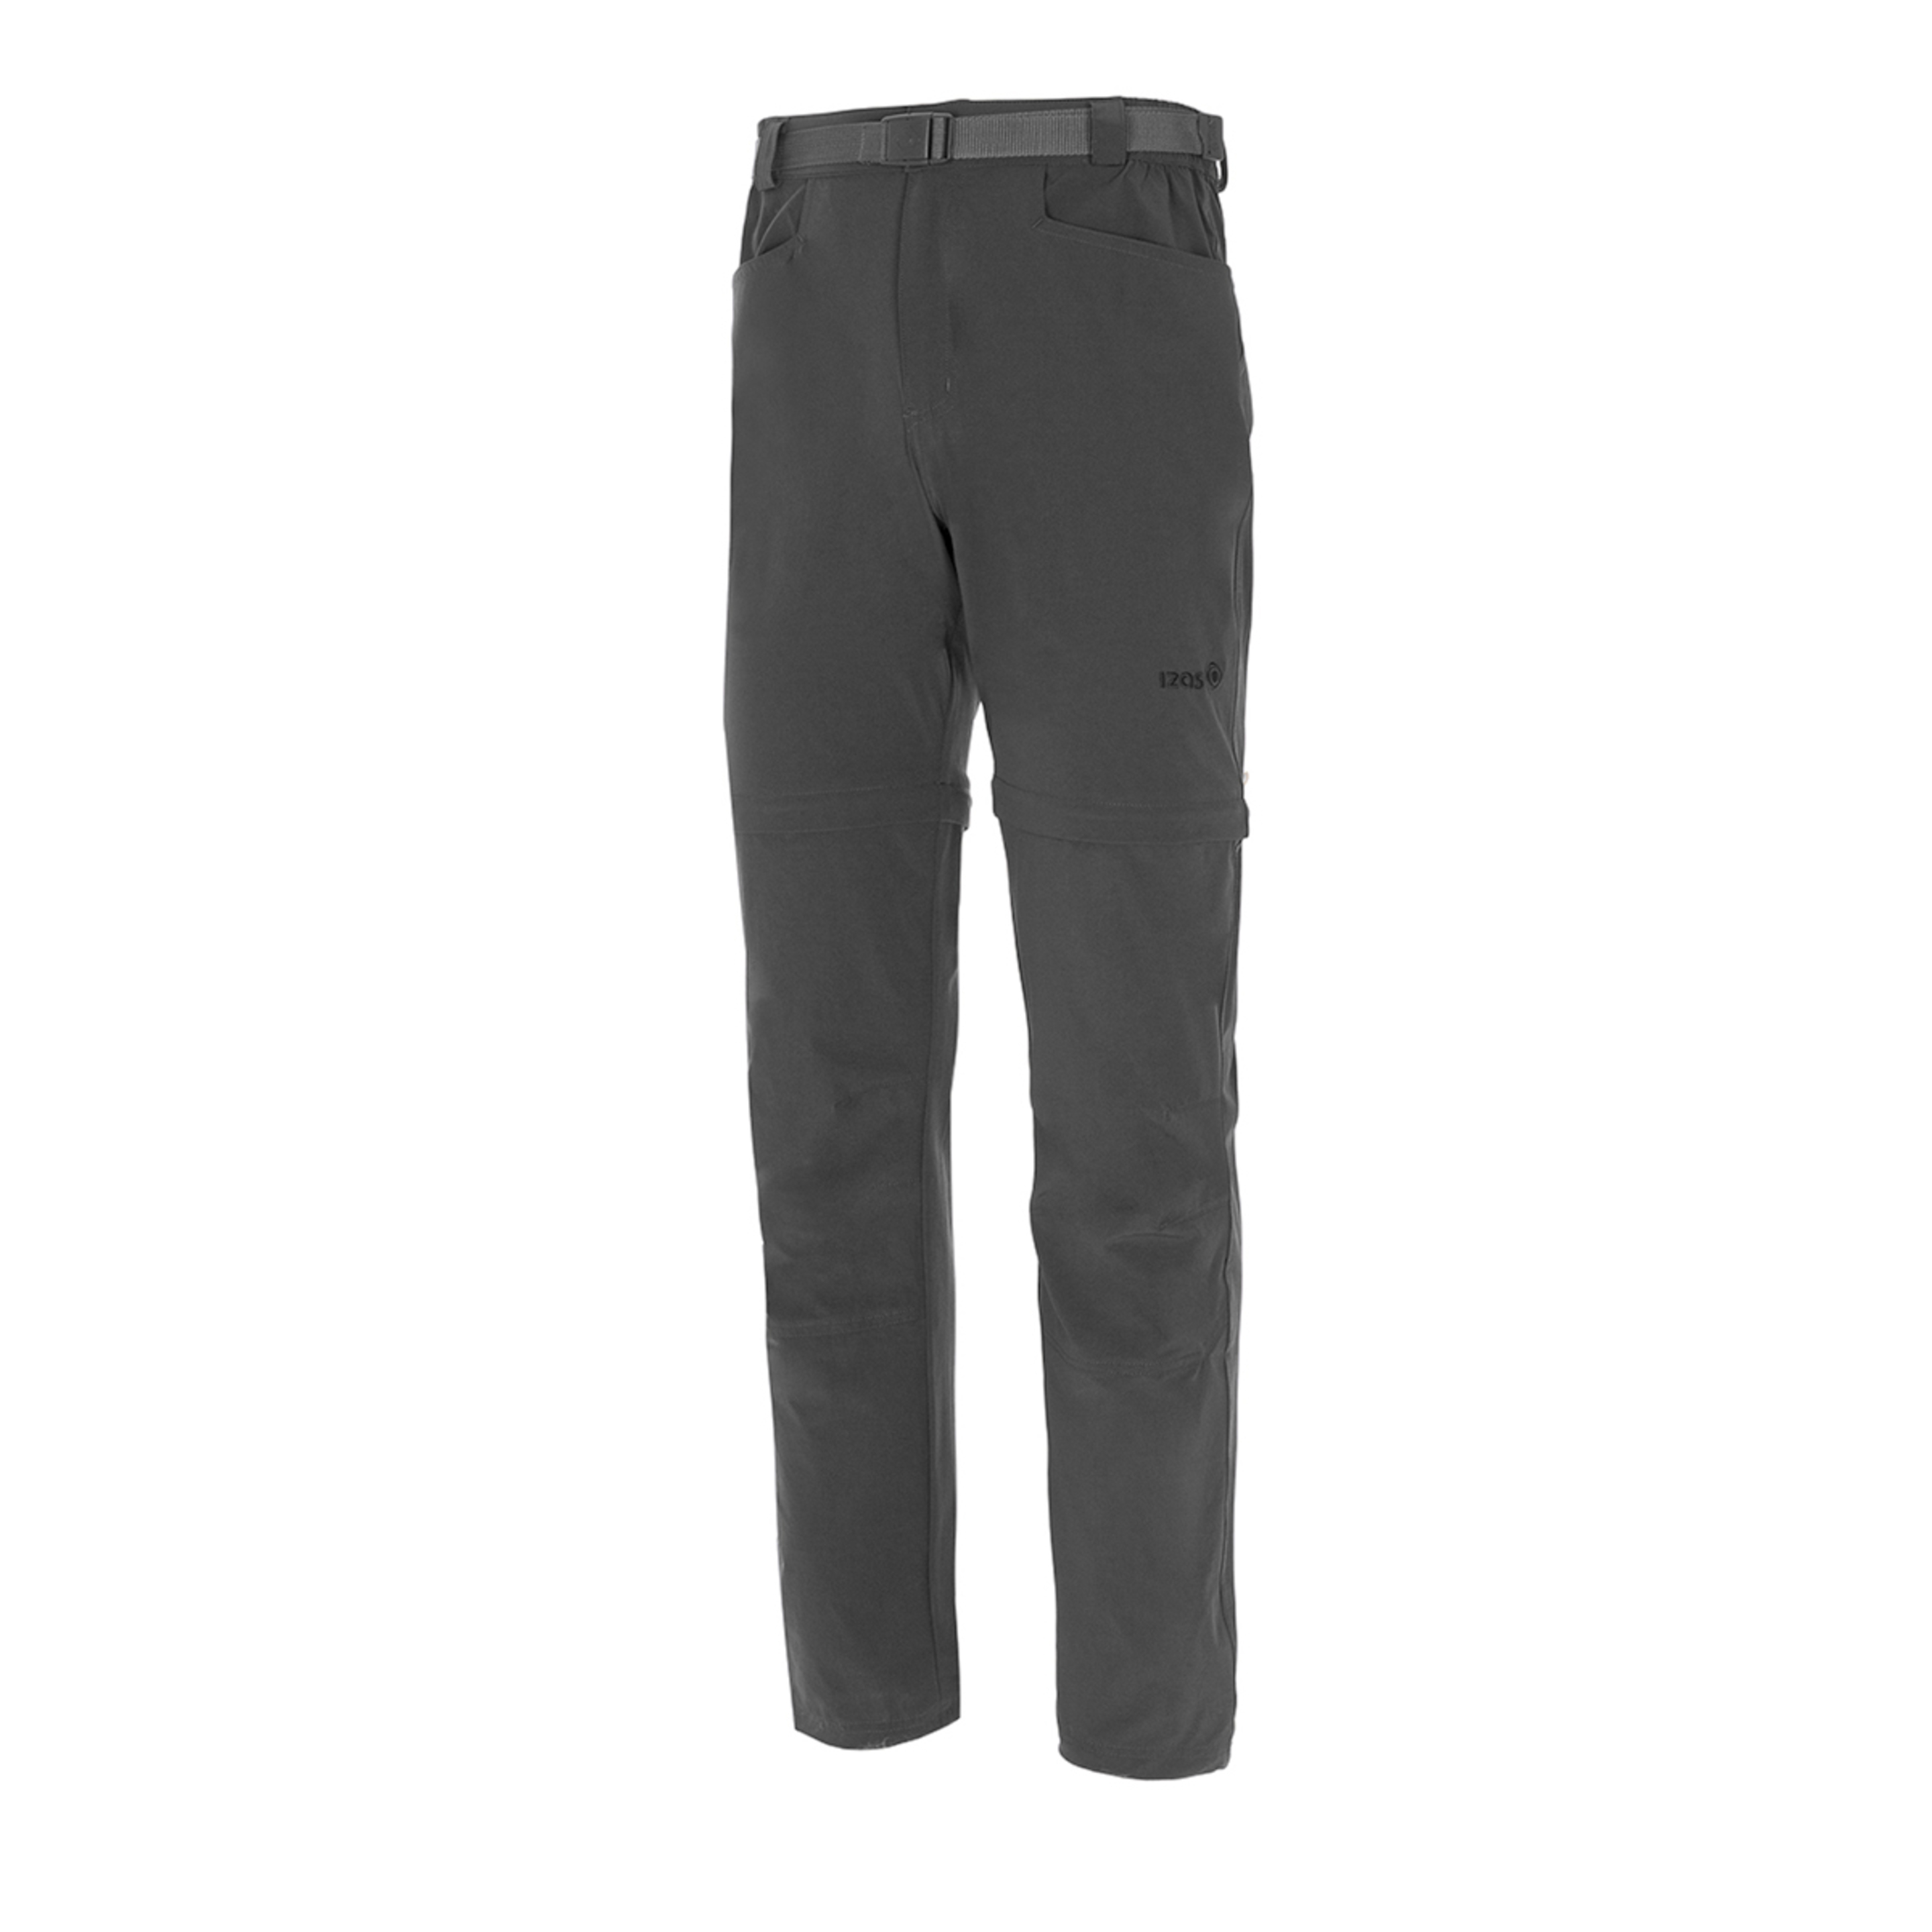 Pantalones Ténicos Desmontables Izas Grani Ii - gris - 